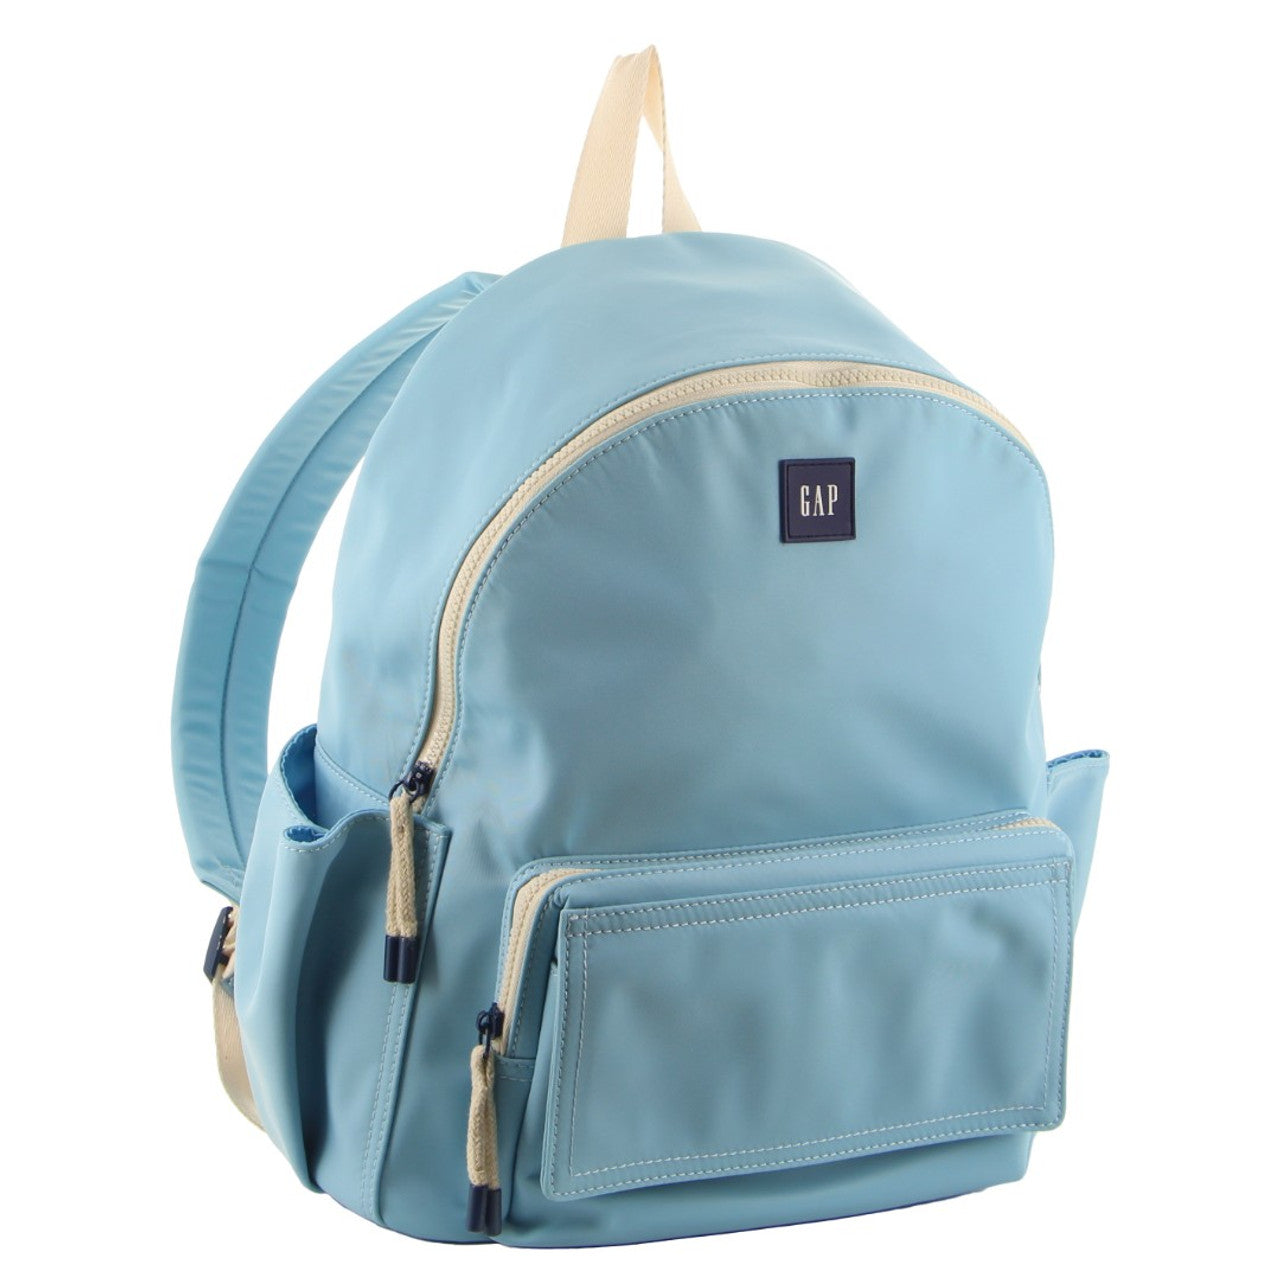 GAP - 11 Nylon Backpack front pocket - Light Blue